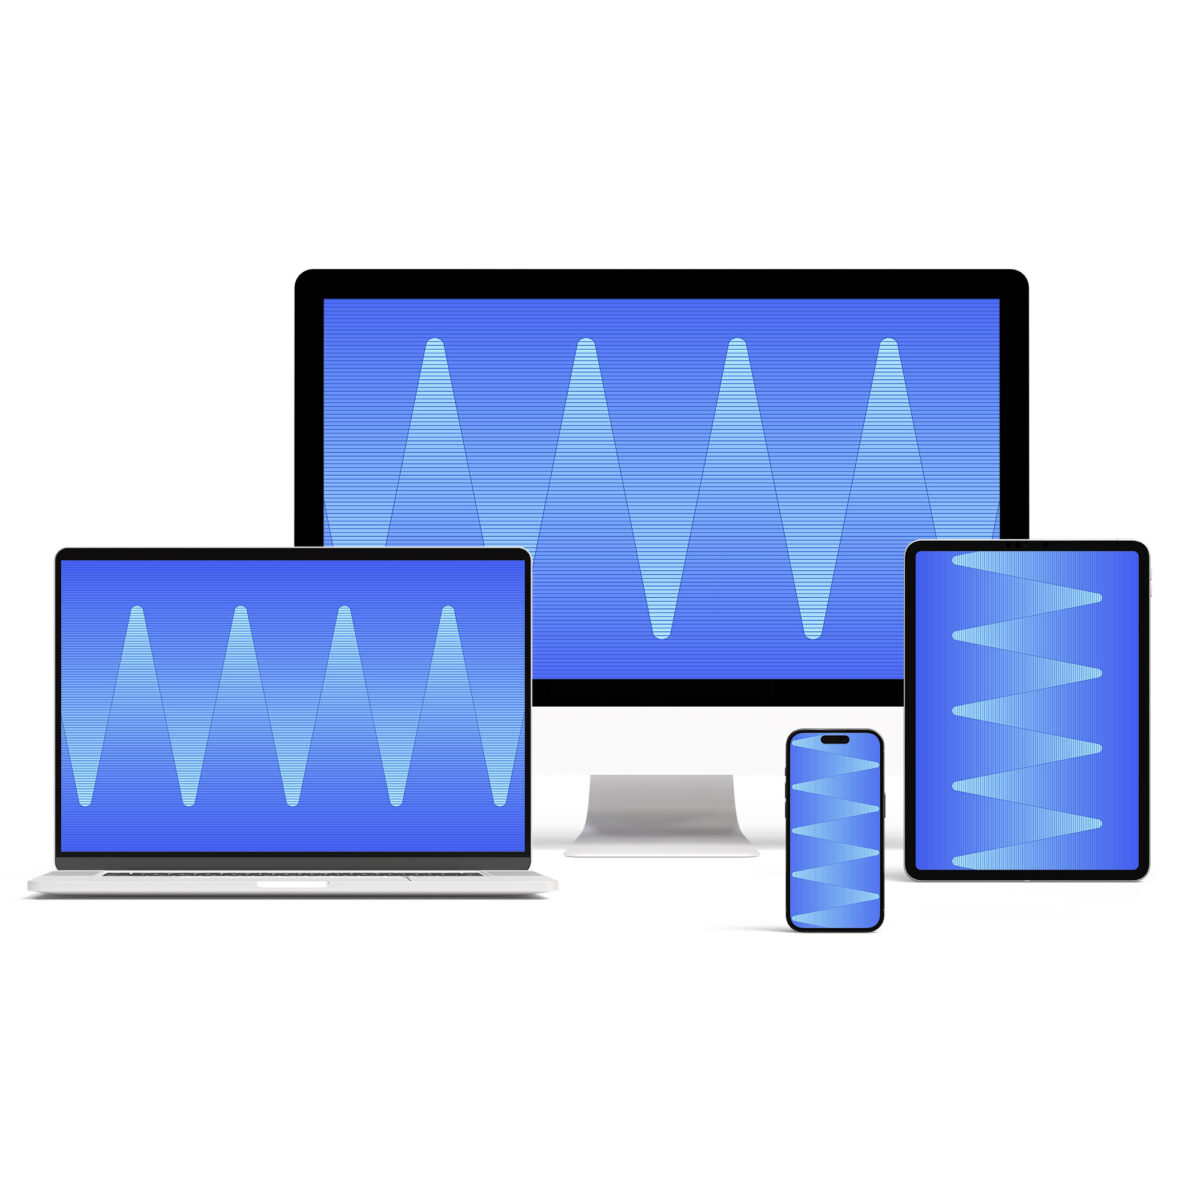 Desktop, laptop, tablet, and mobile phone with Polar Points digital wallpaper backgrounds.